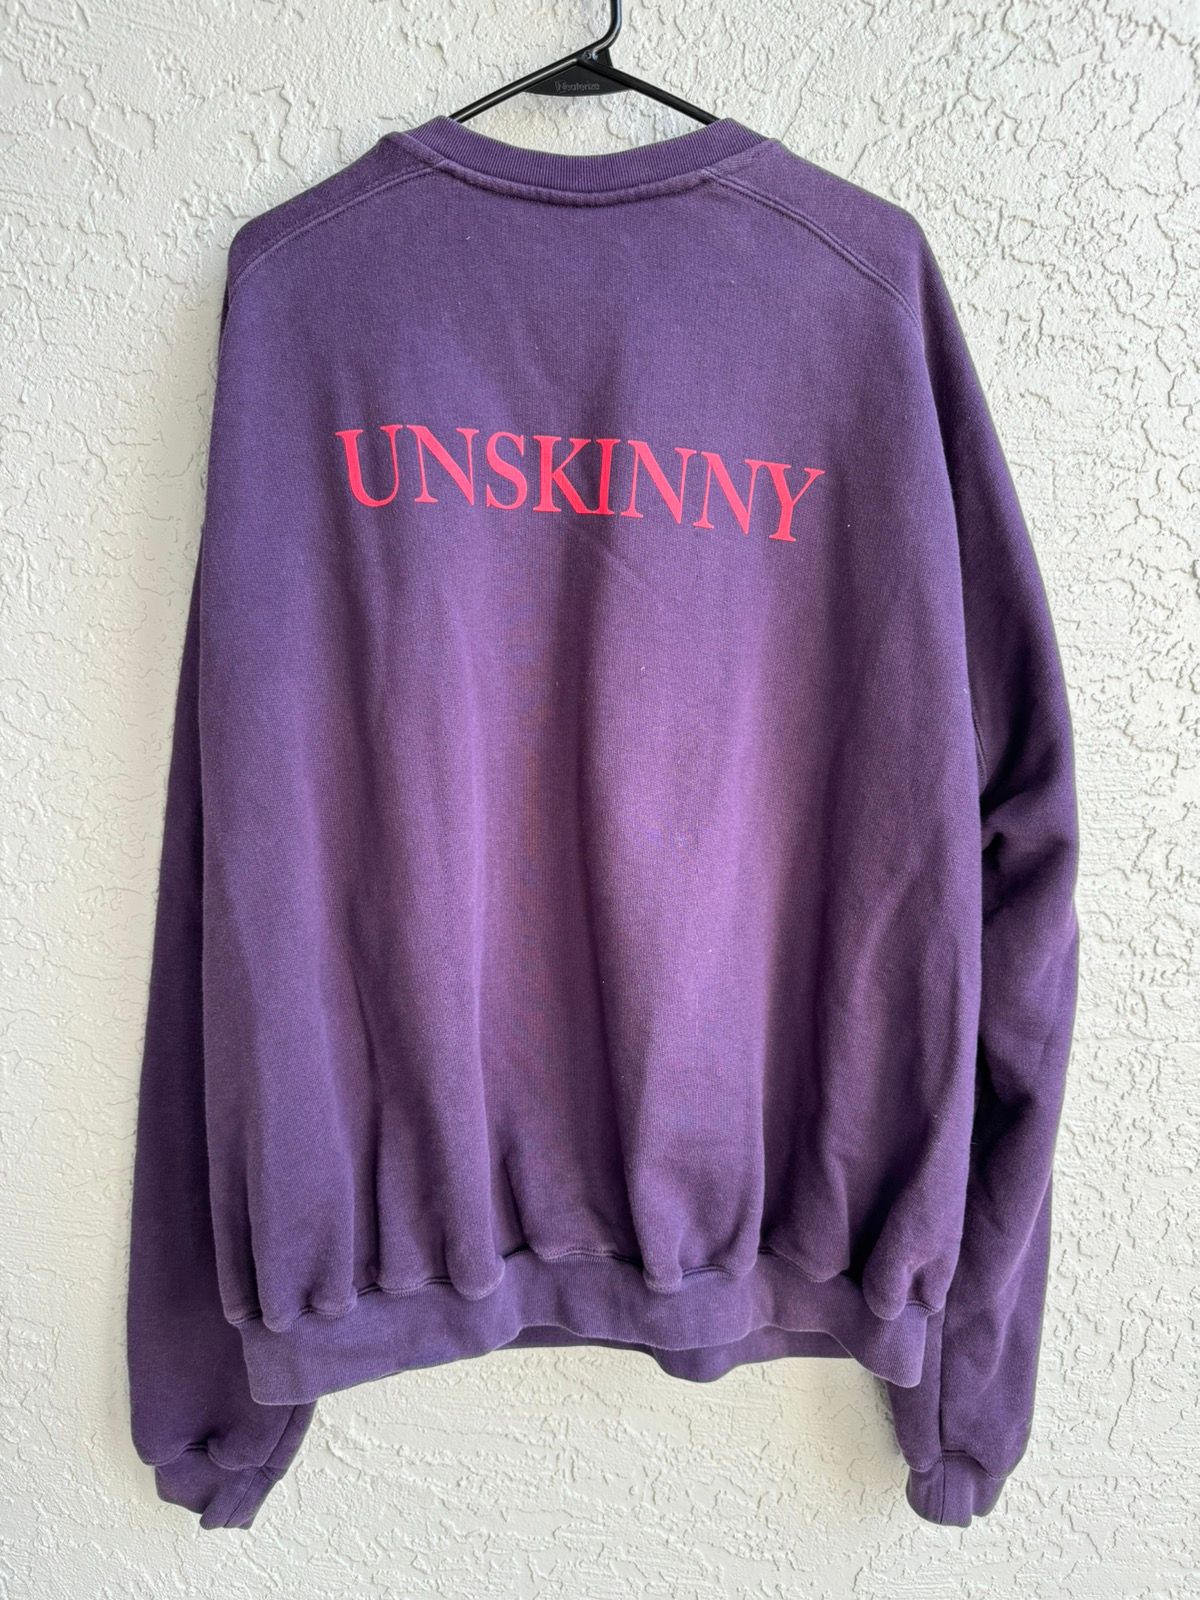 Pre-owned Vetements Unskinny Sweatshirt Fw17 In Purple